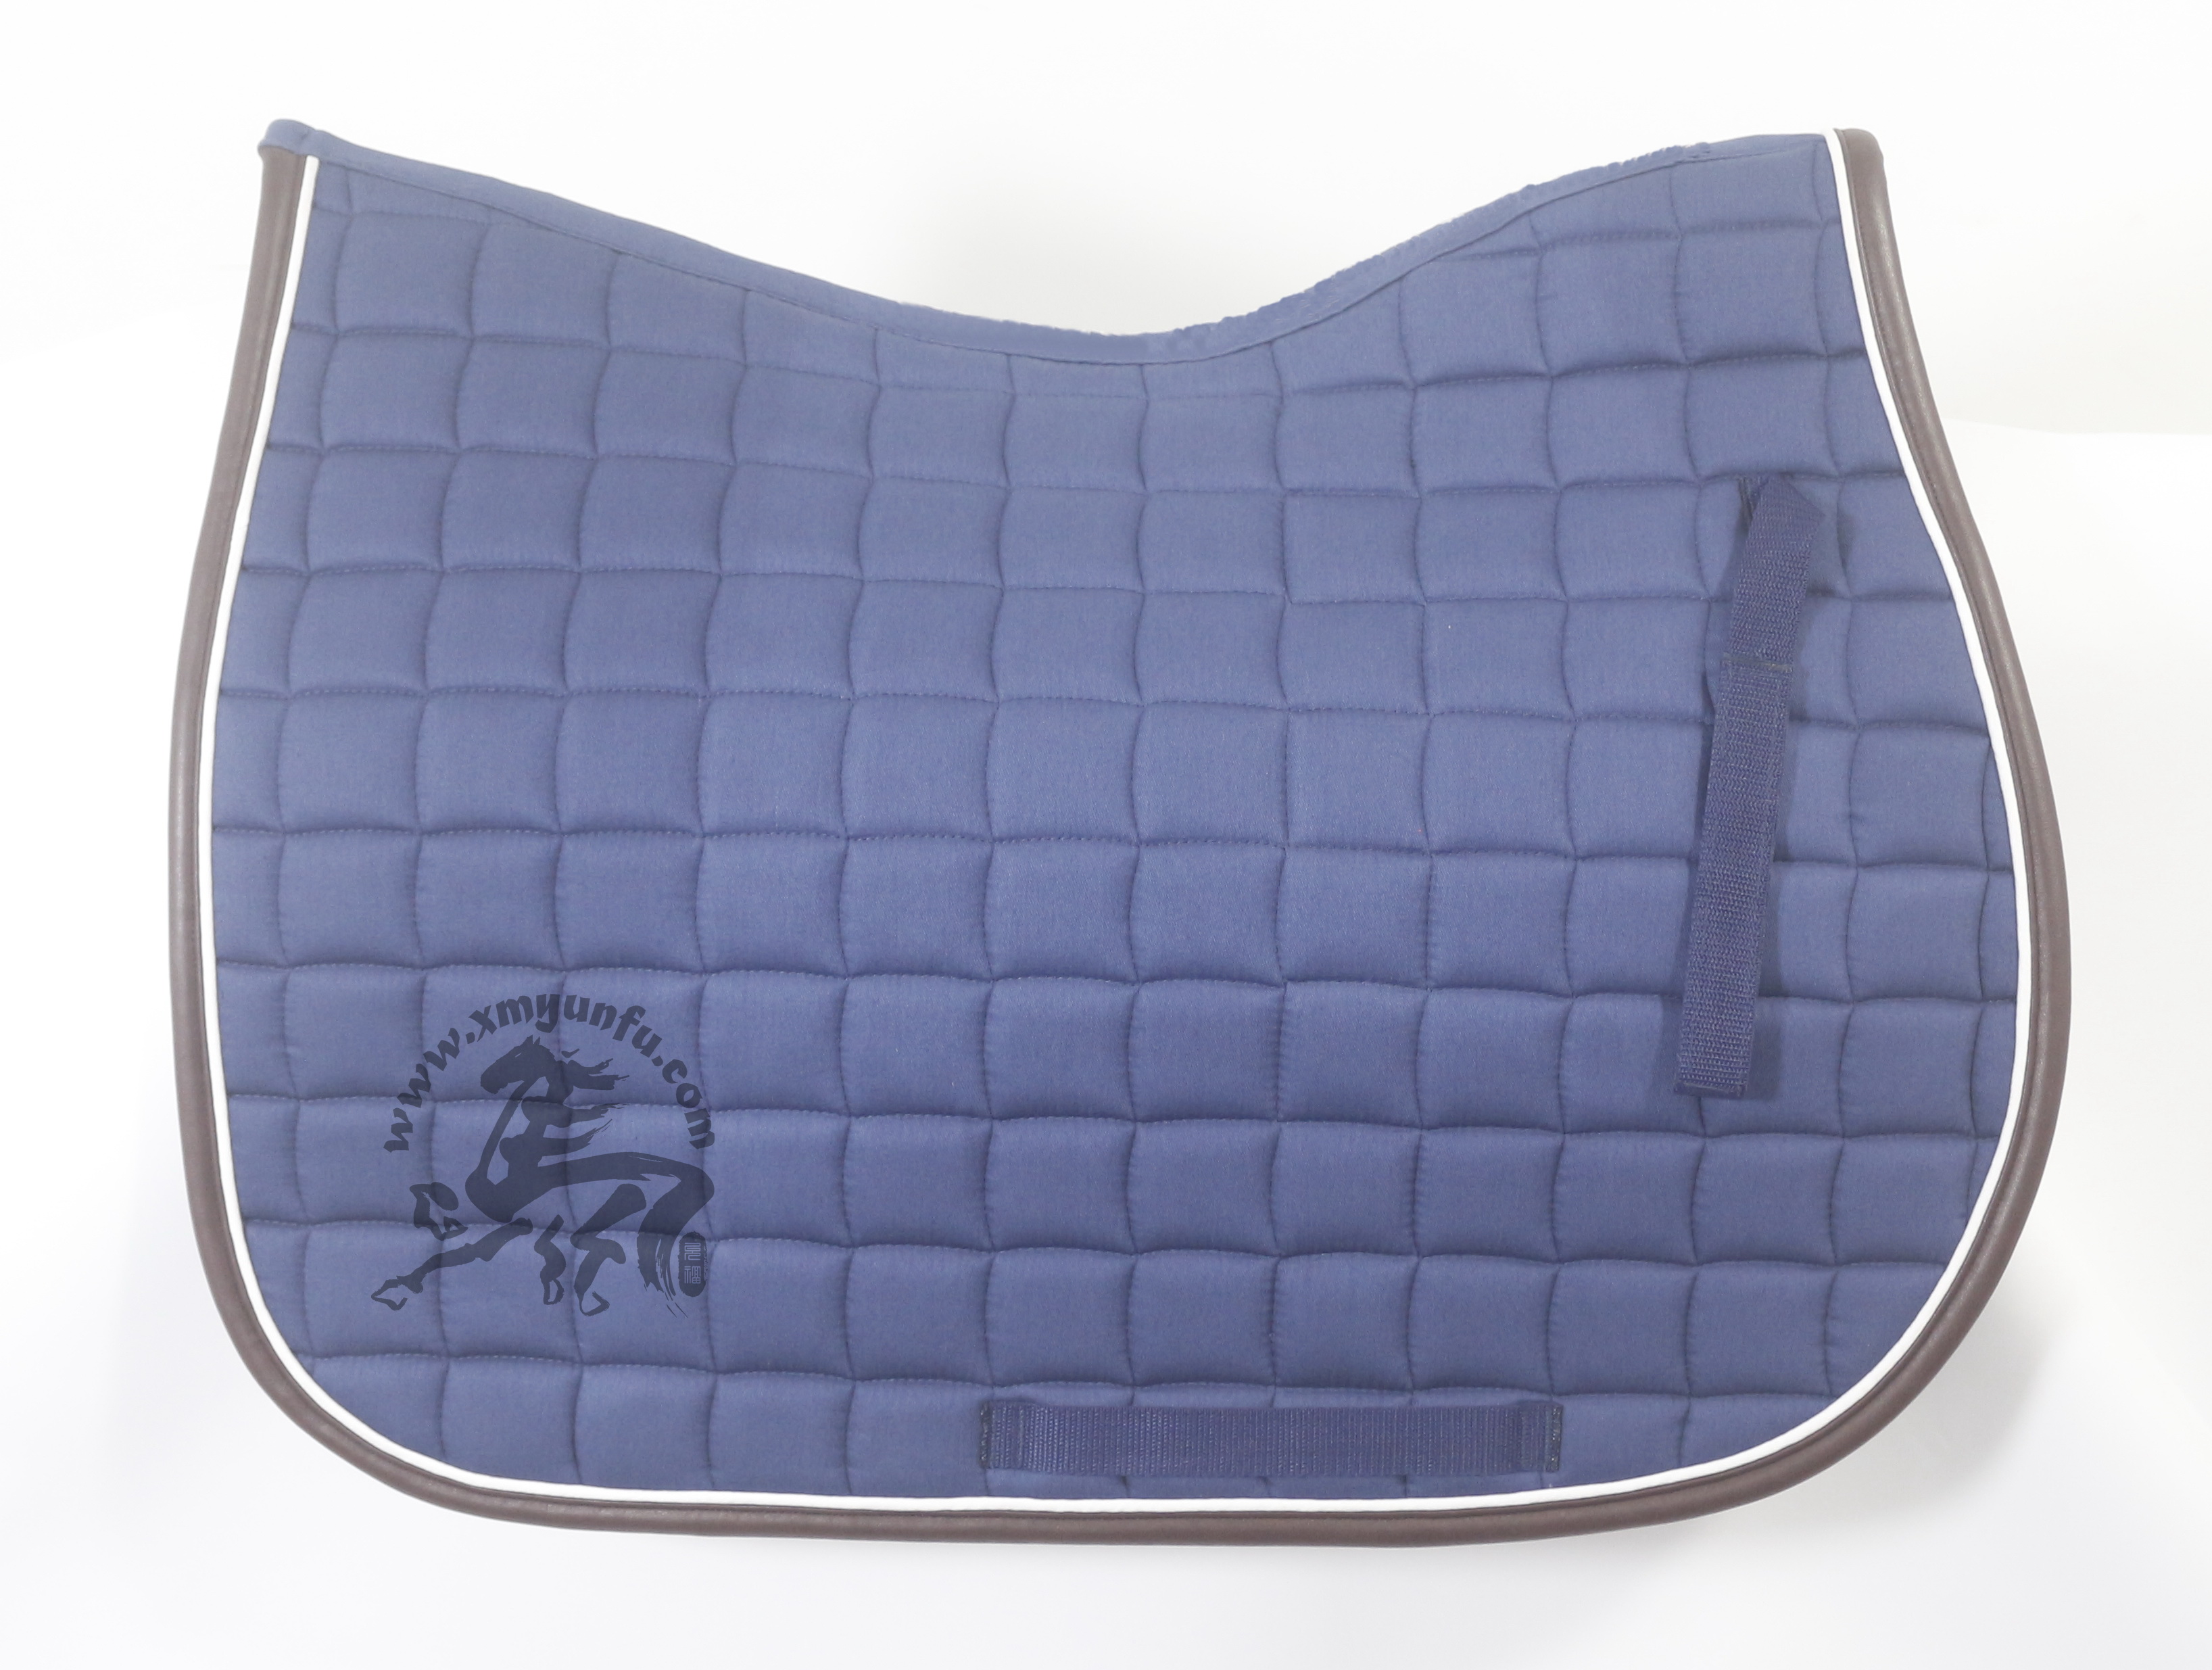 saddel pad with leather binding